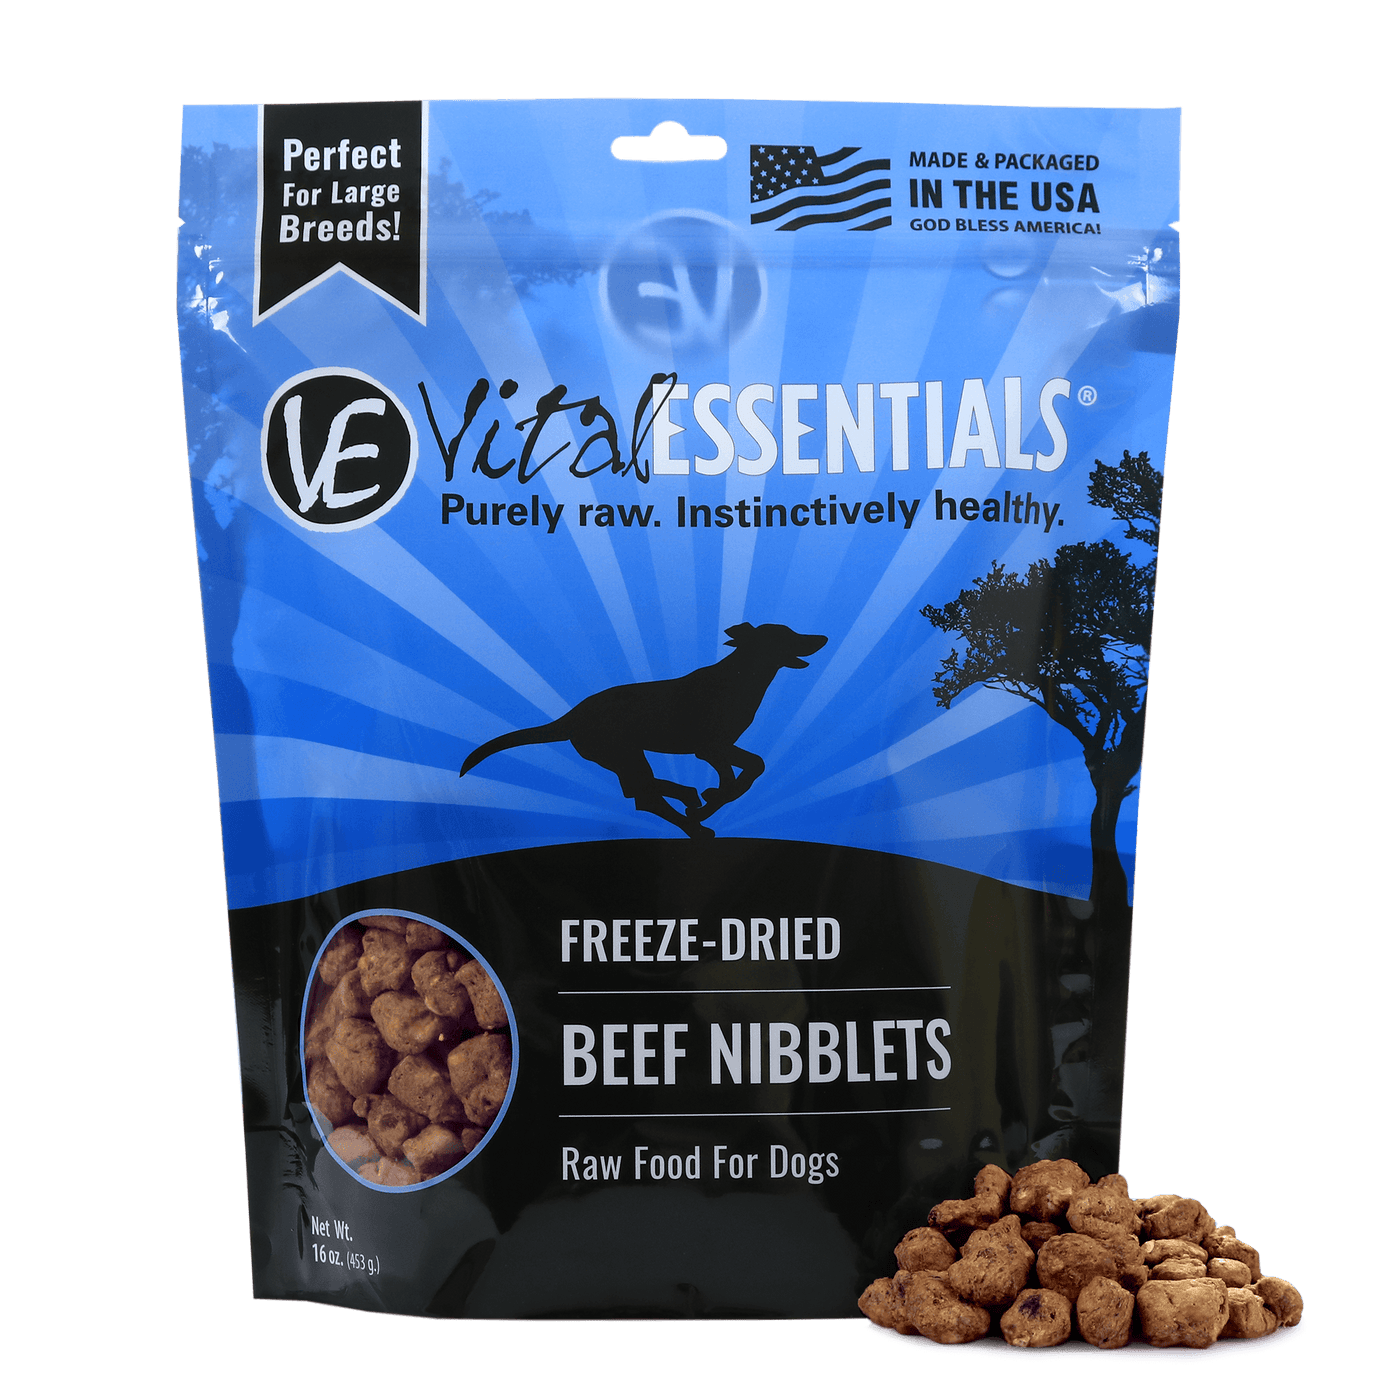 Beef Nibblets Freeze-Dried Grain Free Dog Food